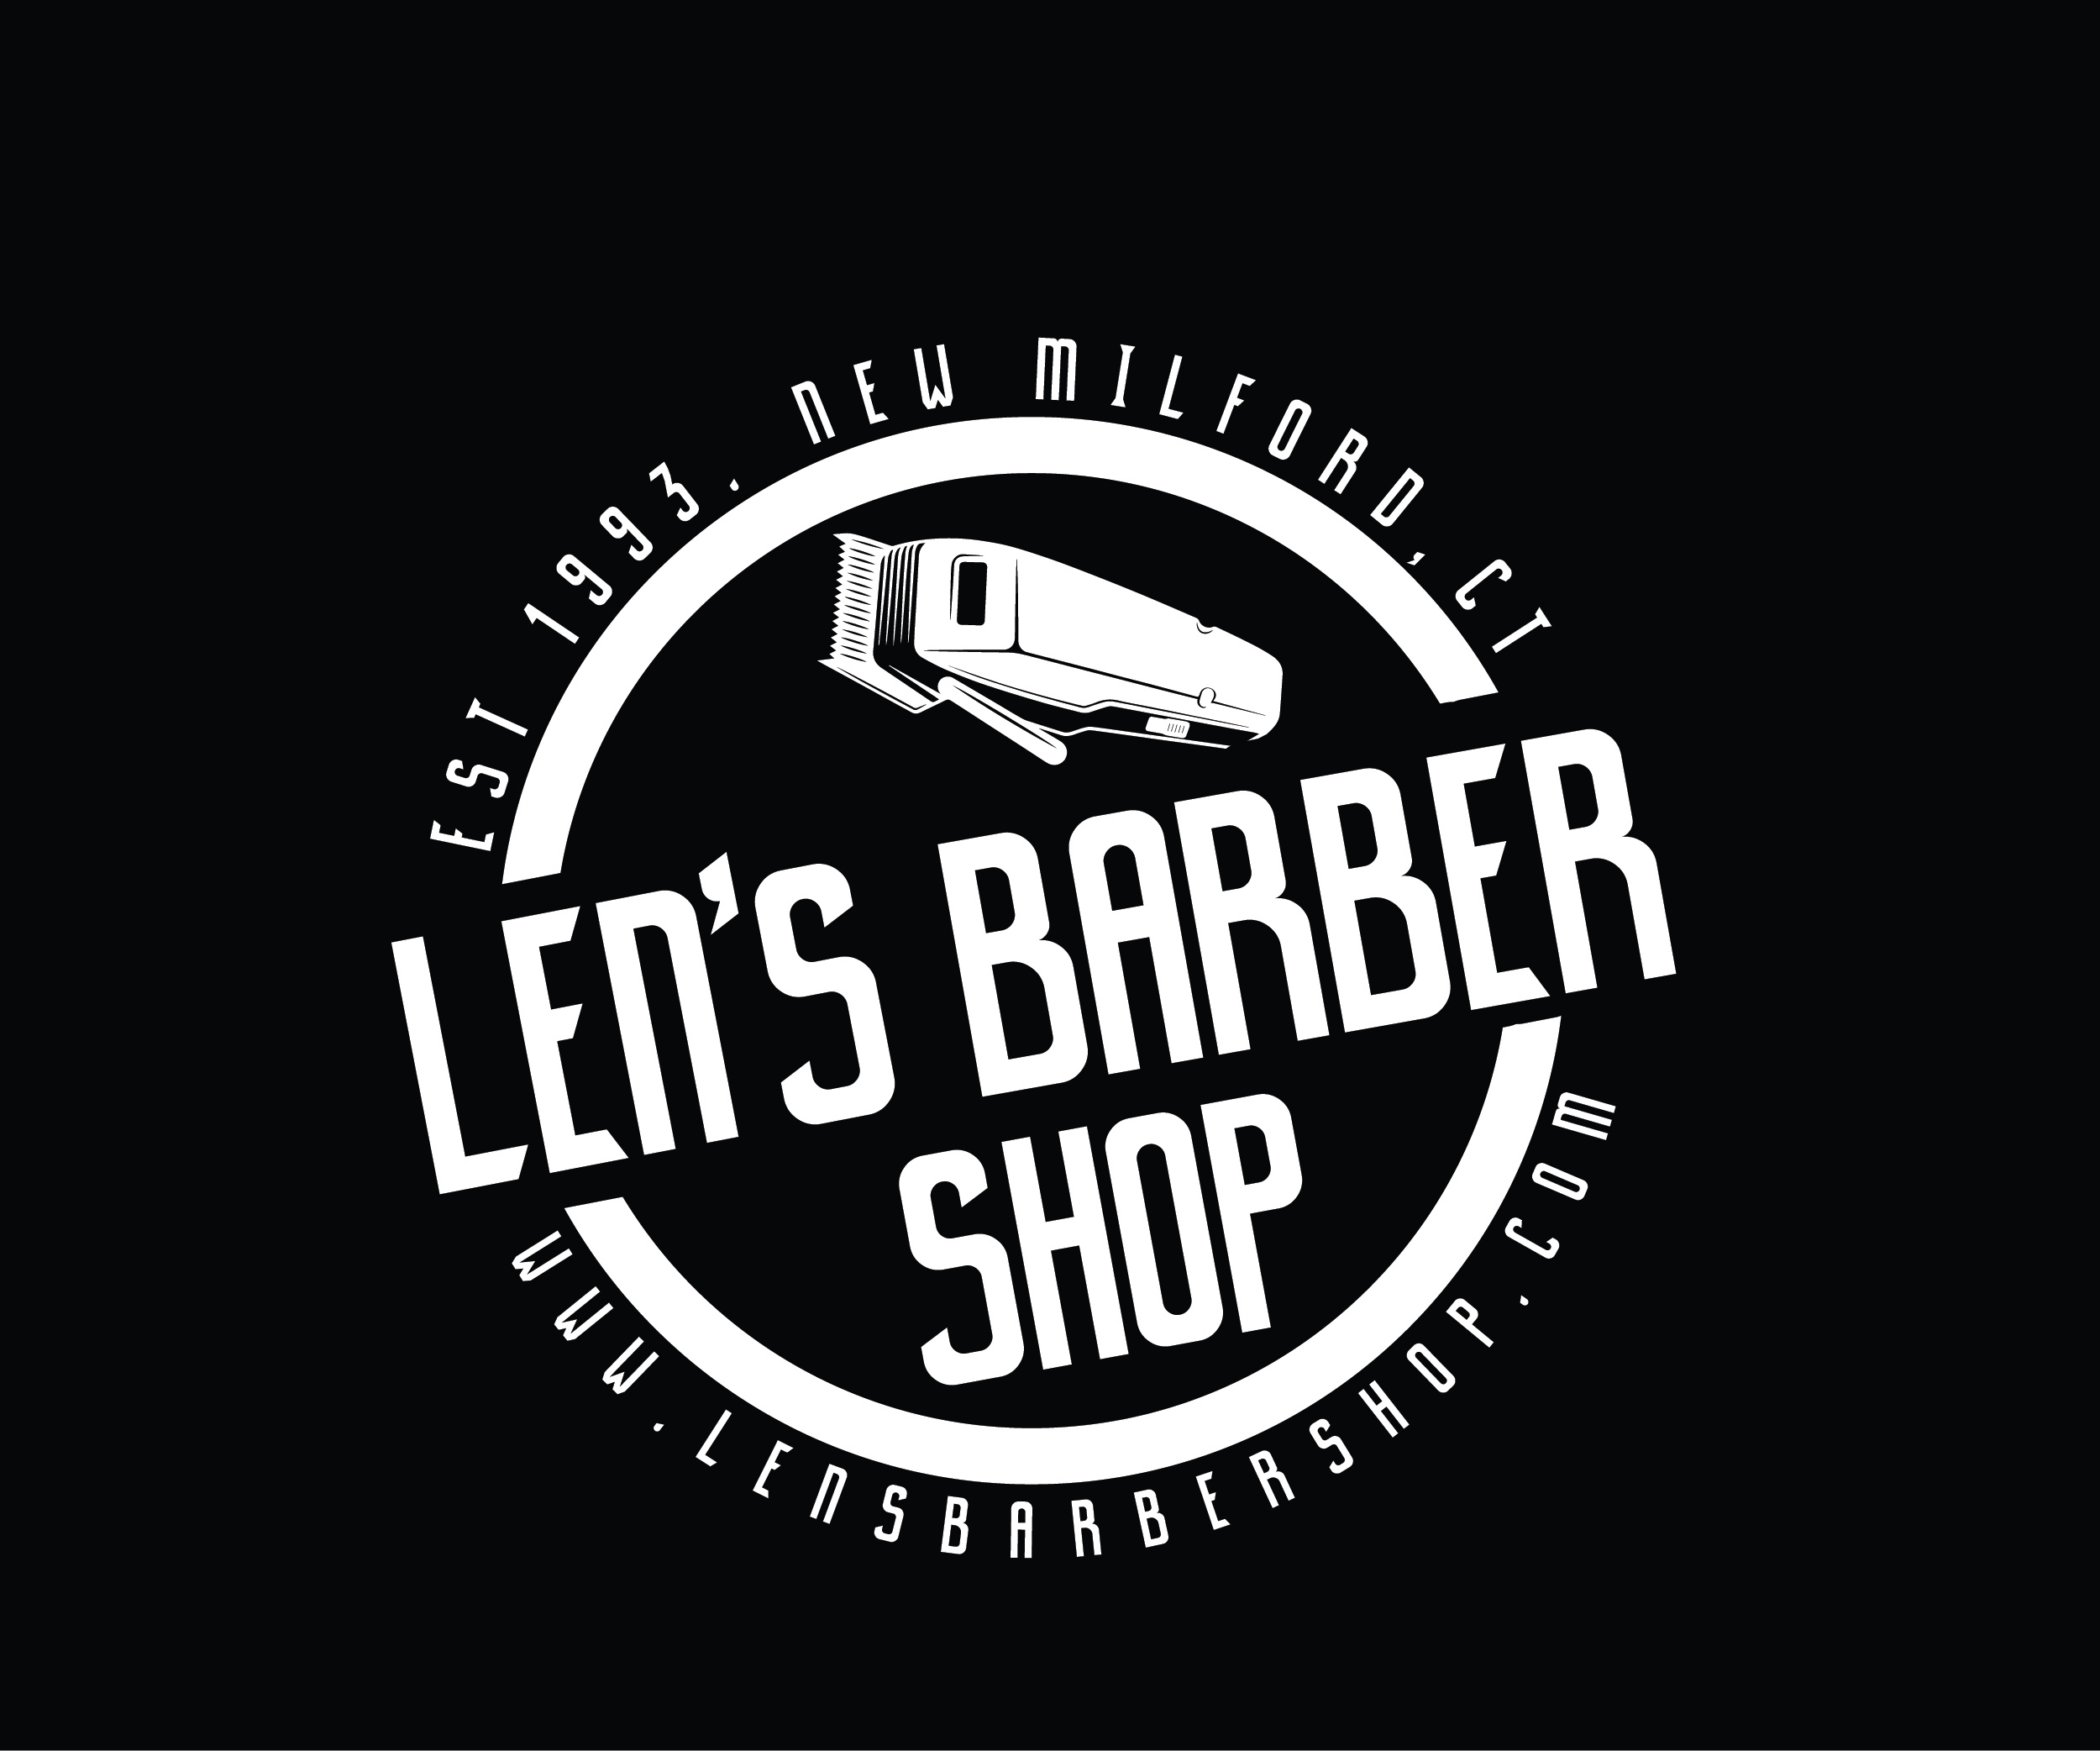 Len S Barber Shop In New Milford Ct Vagaro